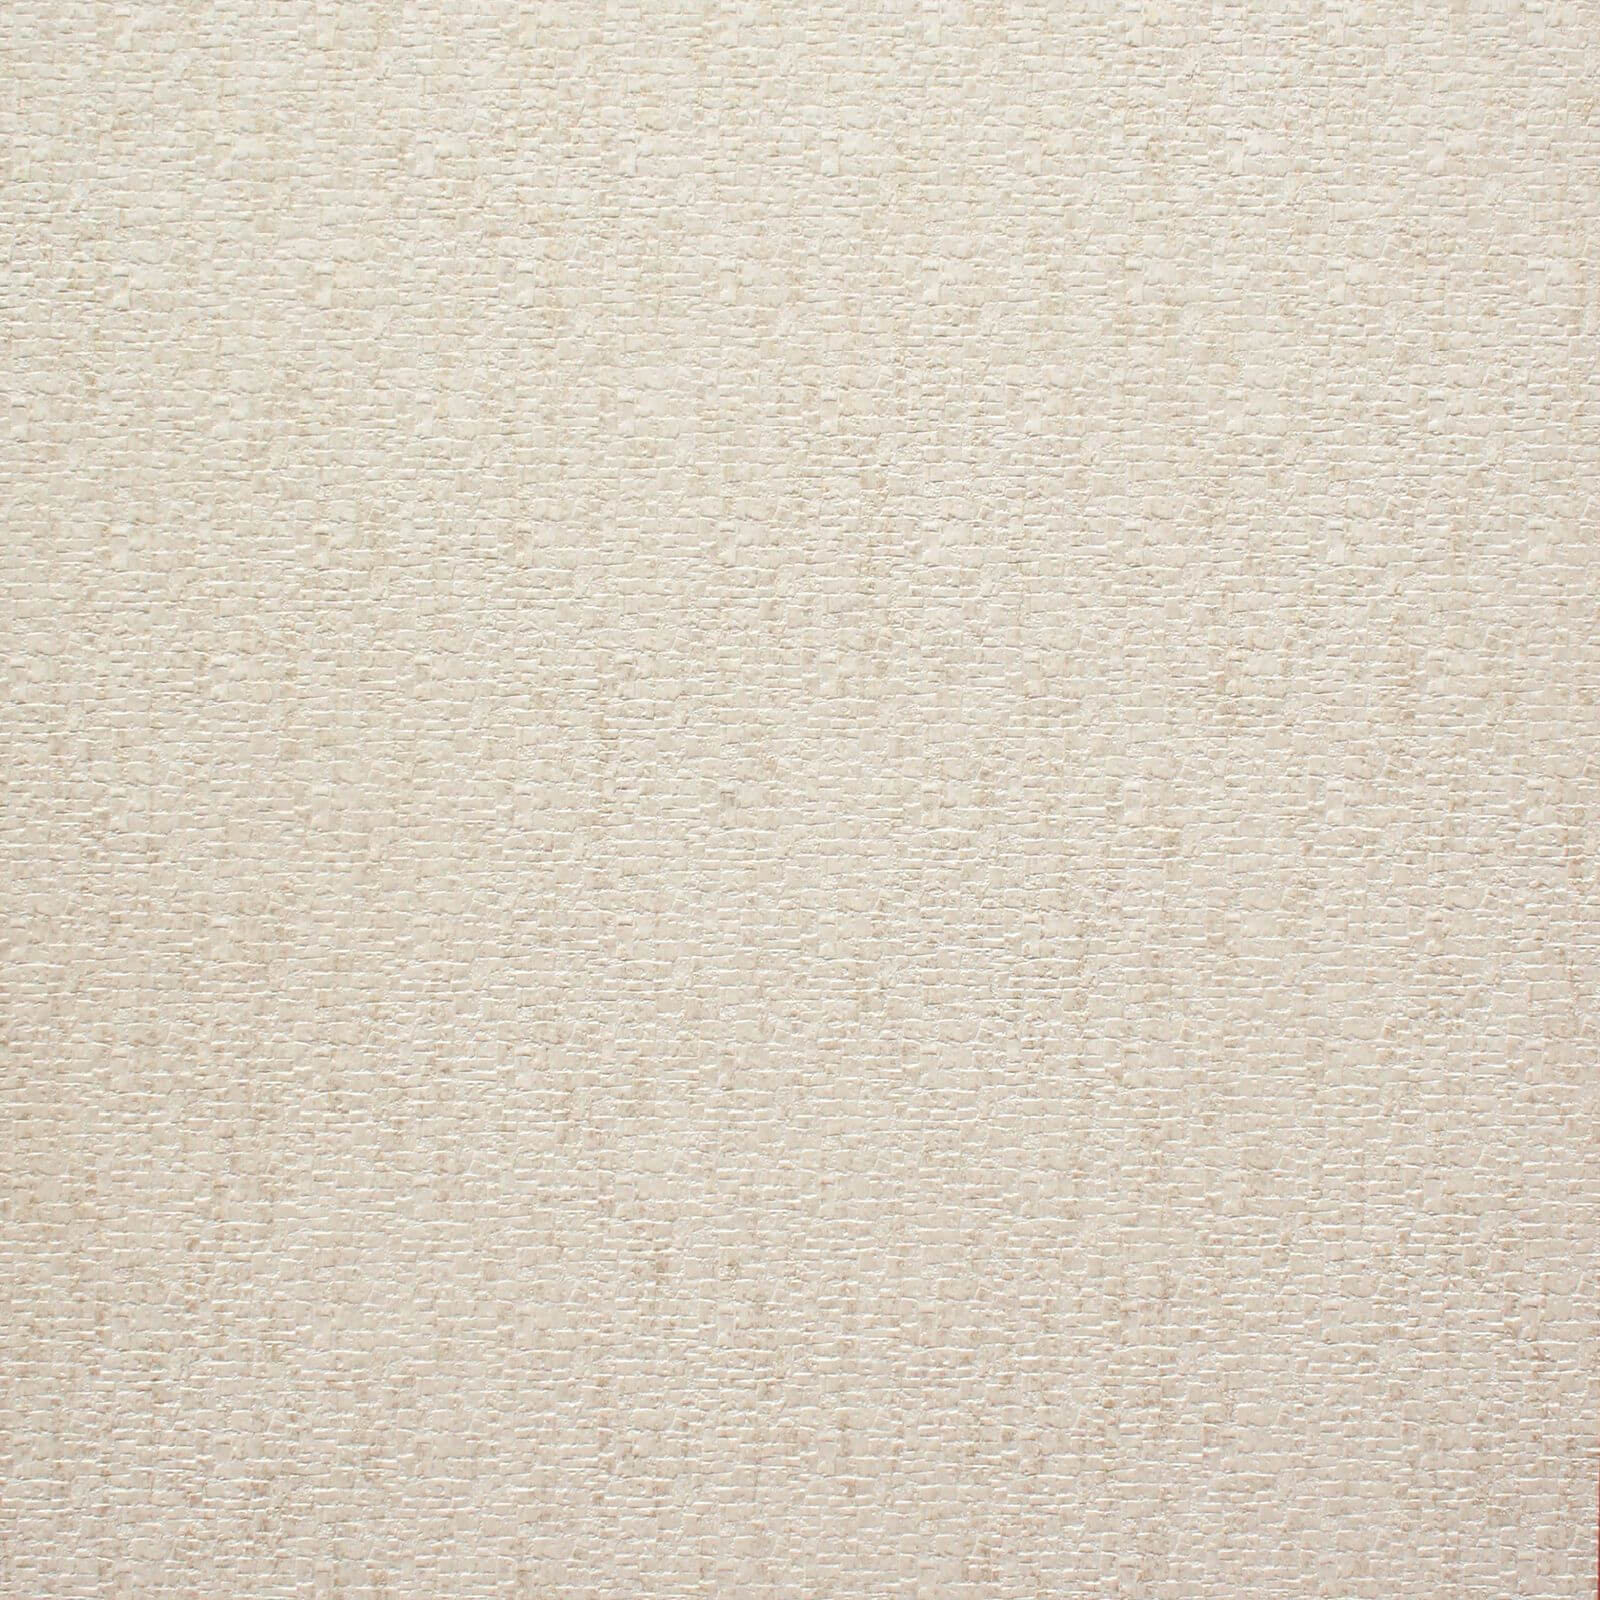 Belgravia Decor Pietra Plain Embossed Metallic Cream Wallpaper